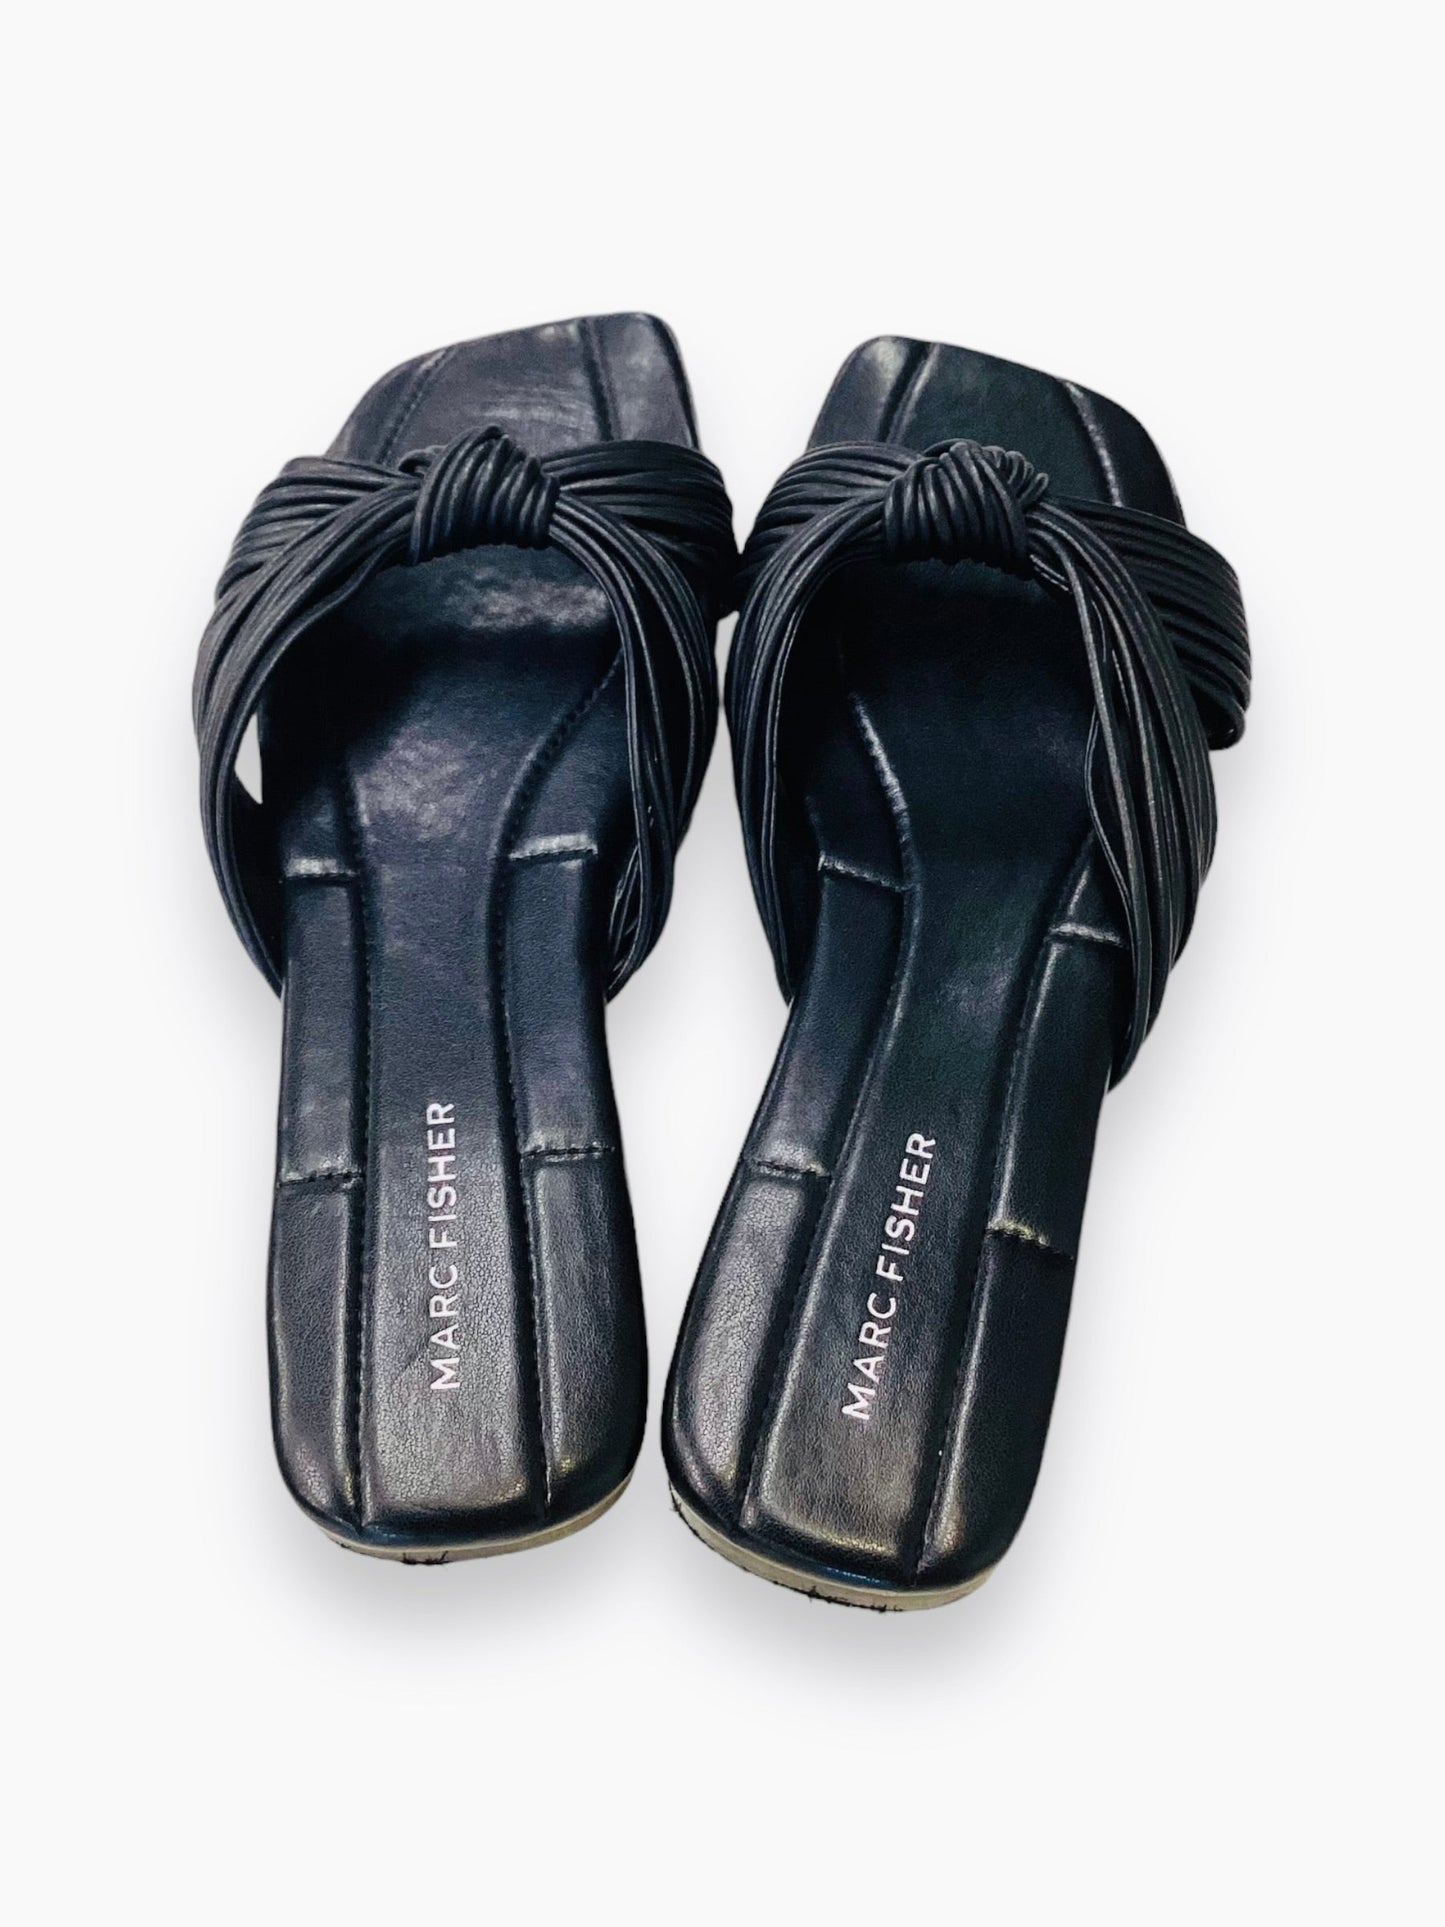 Black Sandals Flats Marc Fisher, Size 9.5